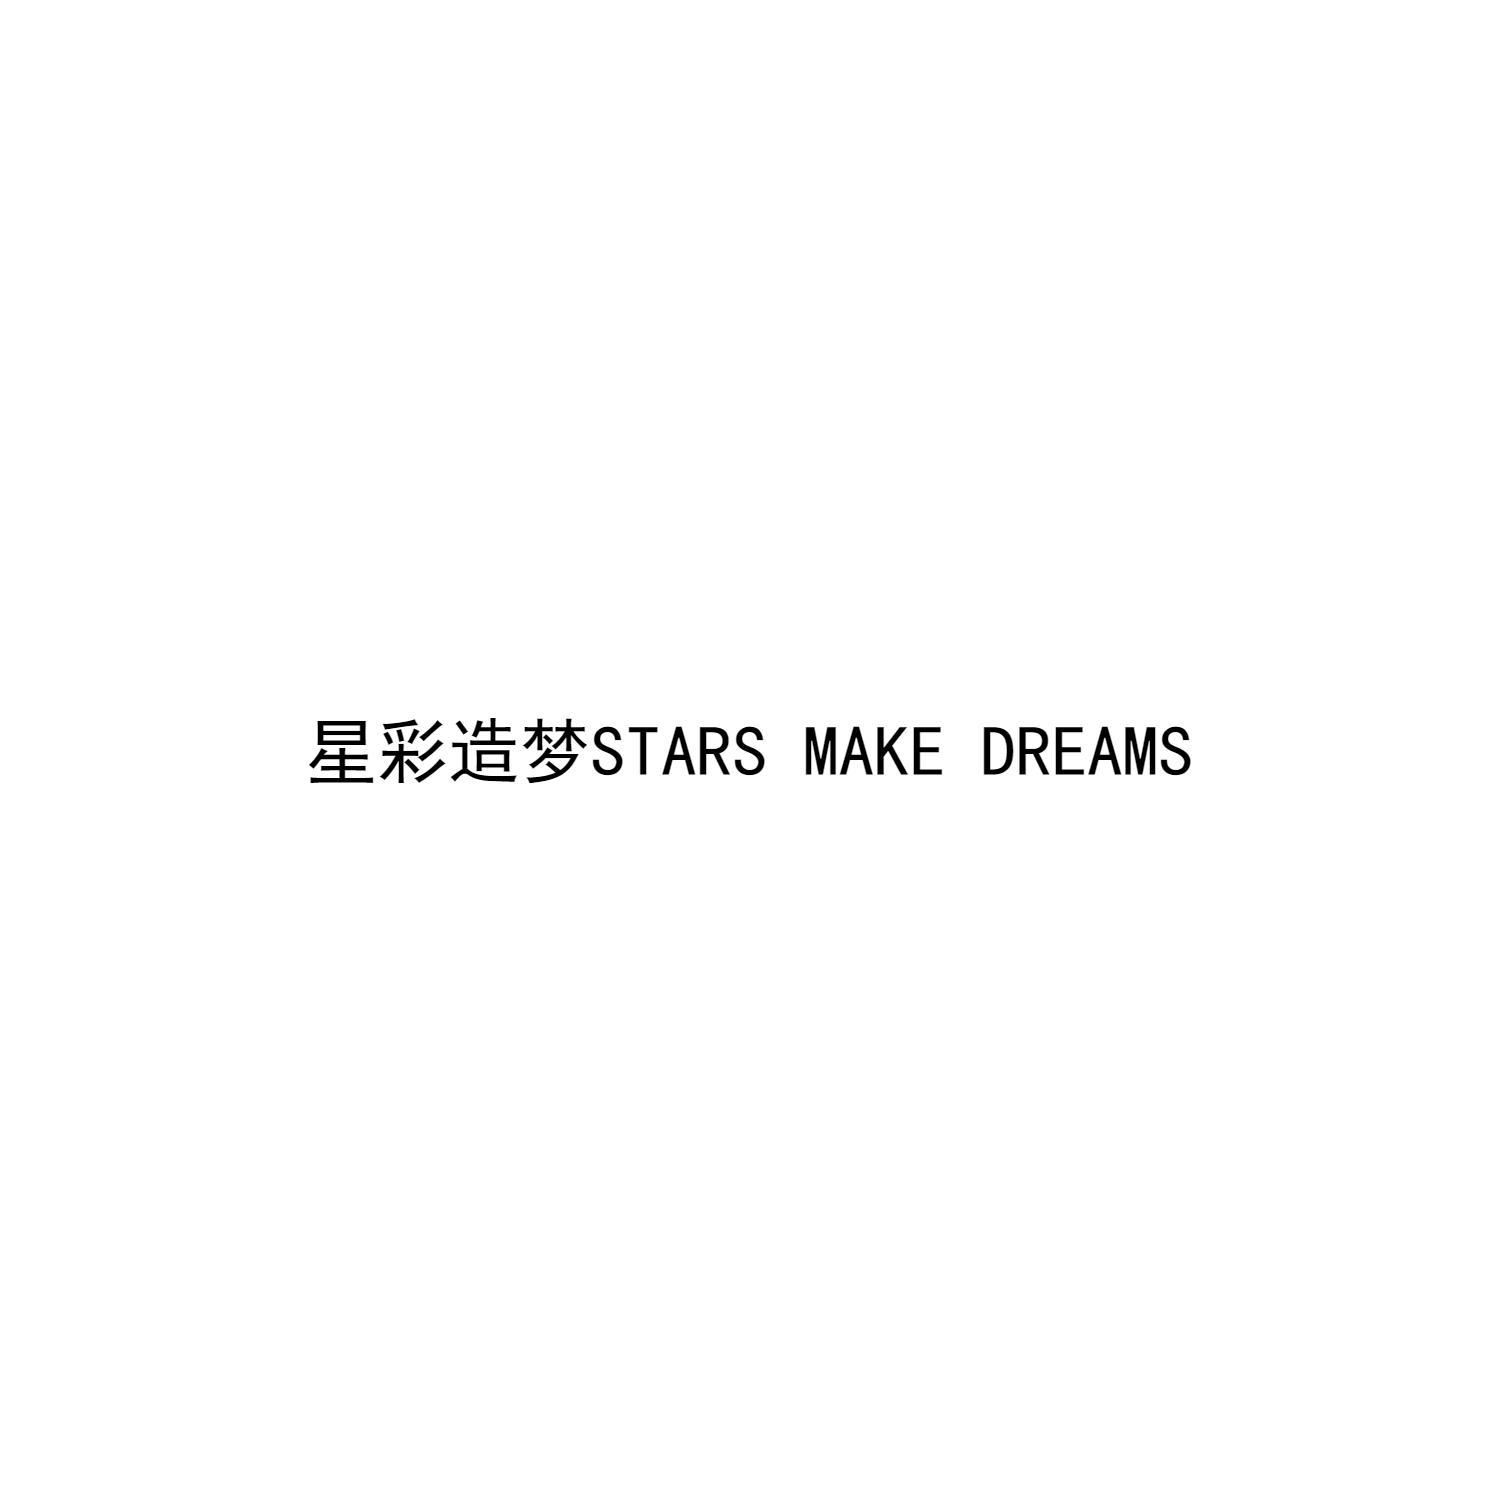 星彩造梦 STARS MAKE DREAMS